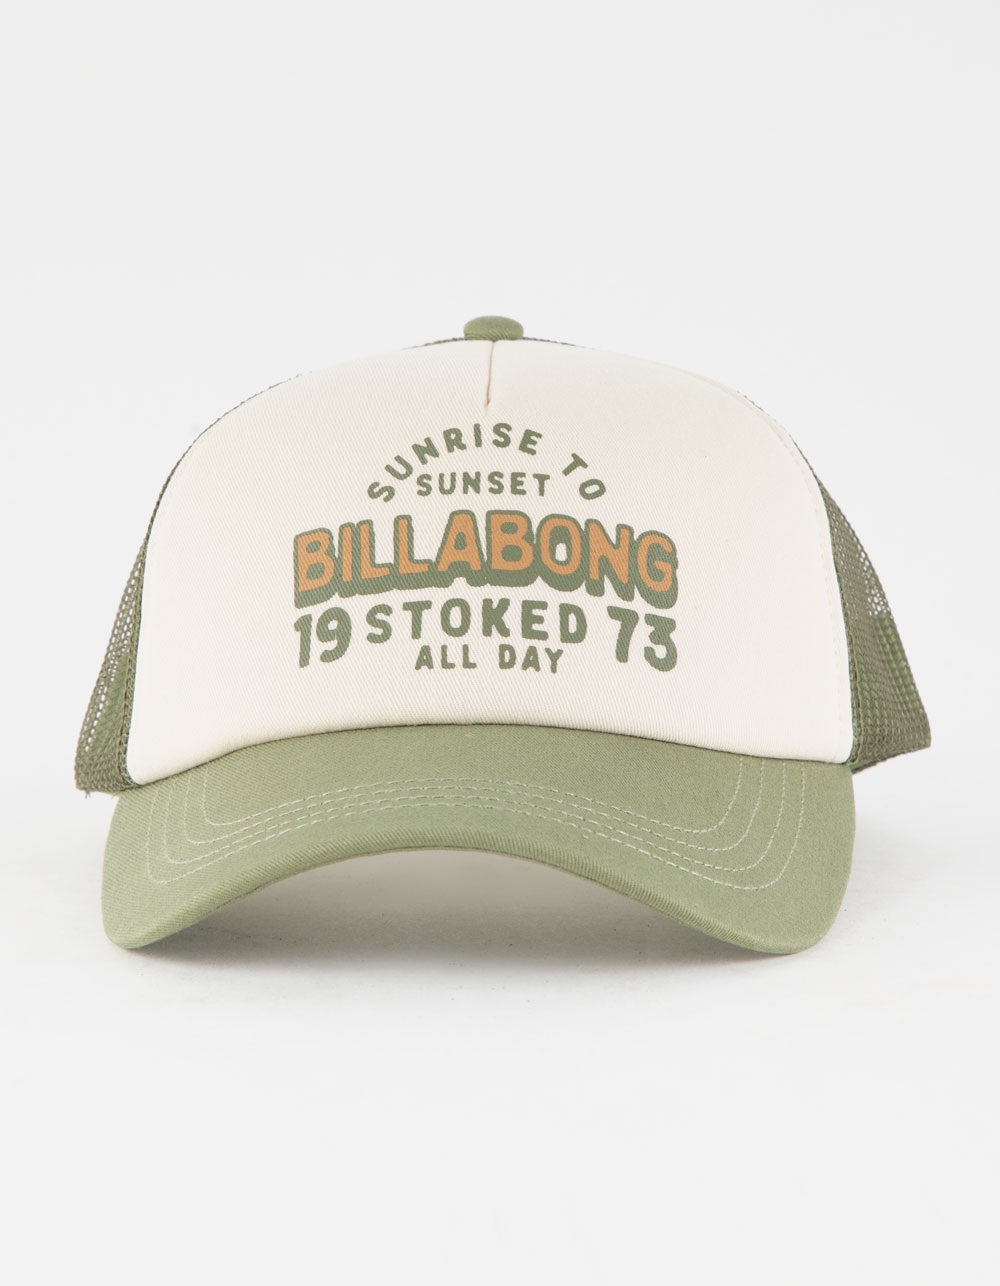 BILLABONG Aloha Forever Womens Trucker Hat